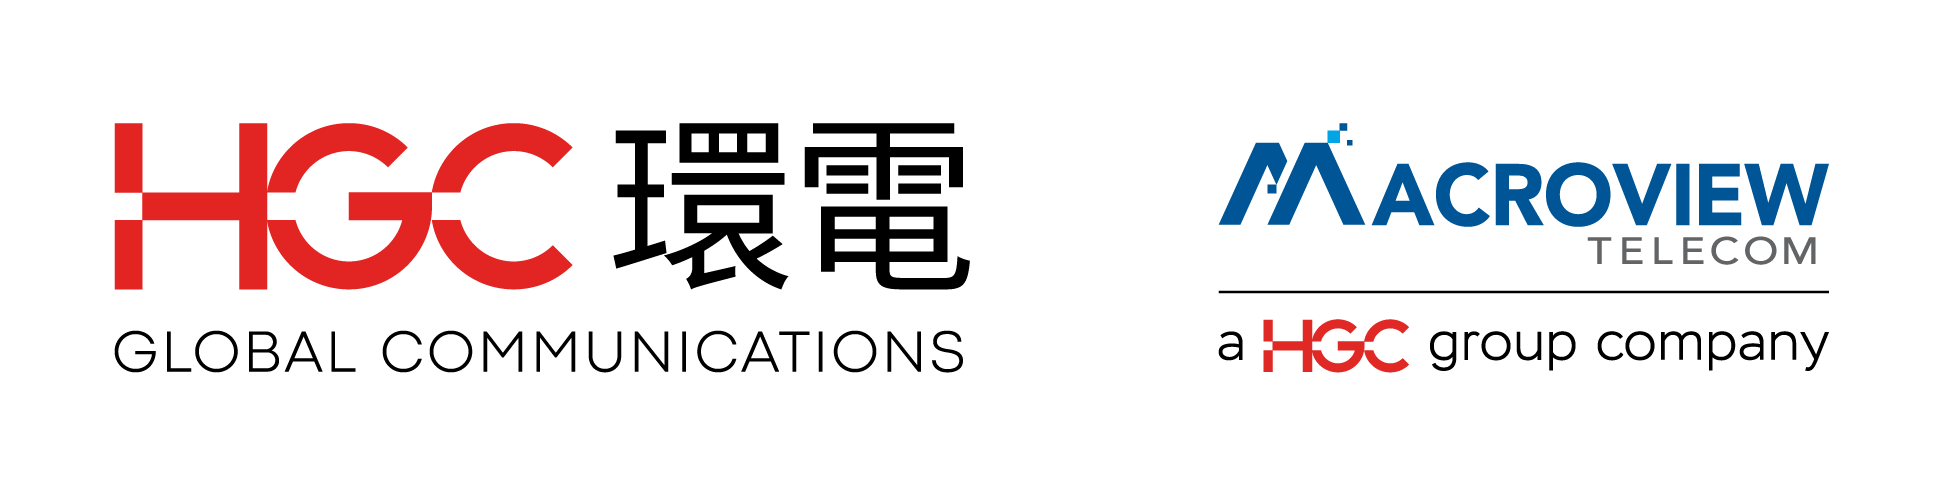 macroview logo